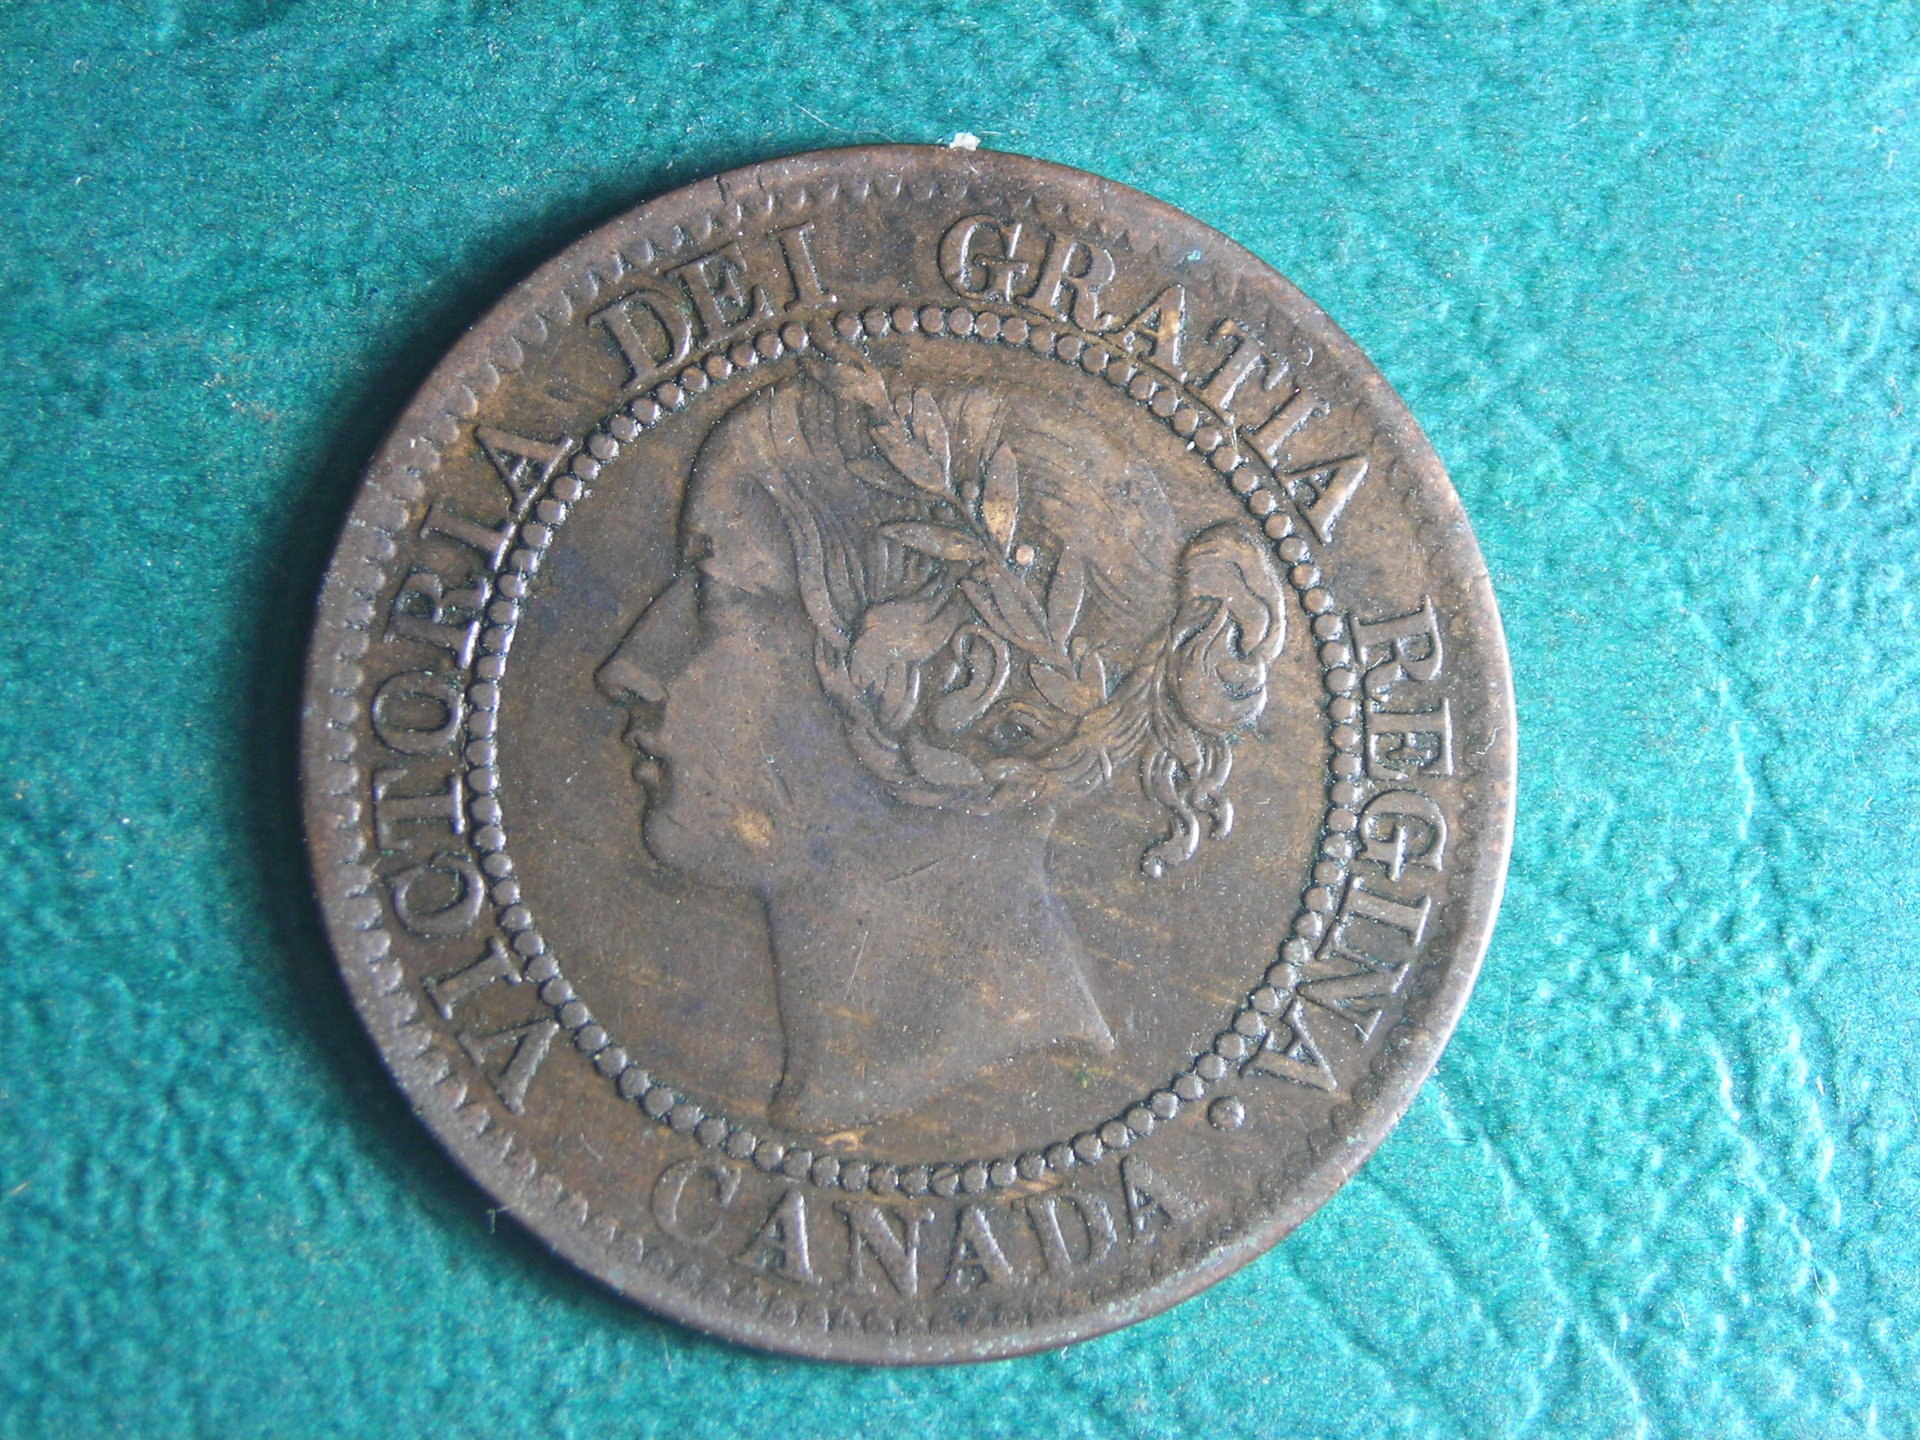 1859 Canada 1 c obv.JPG